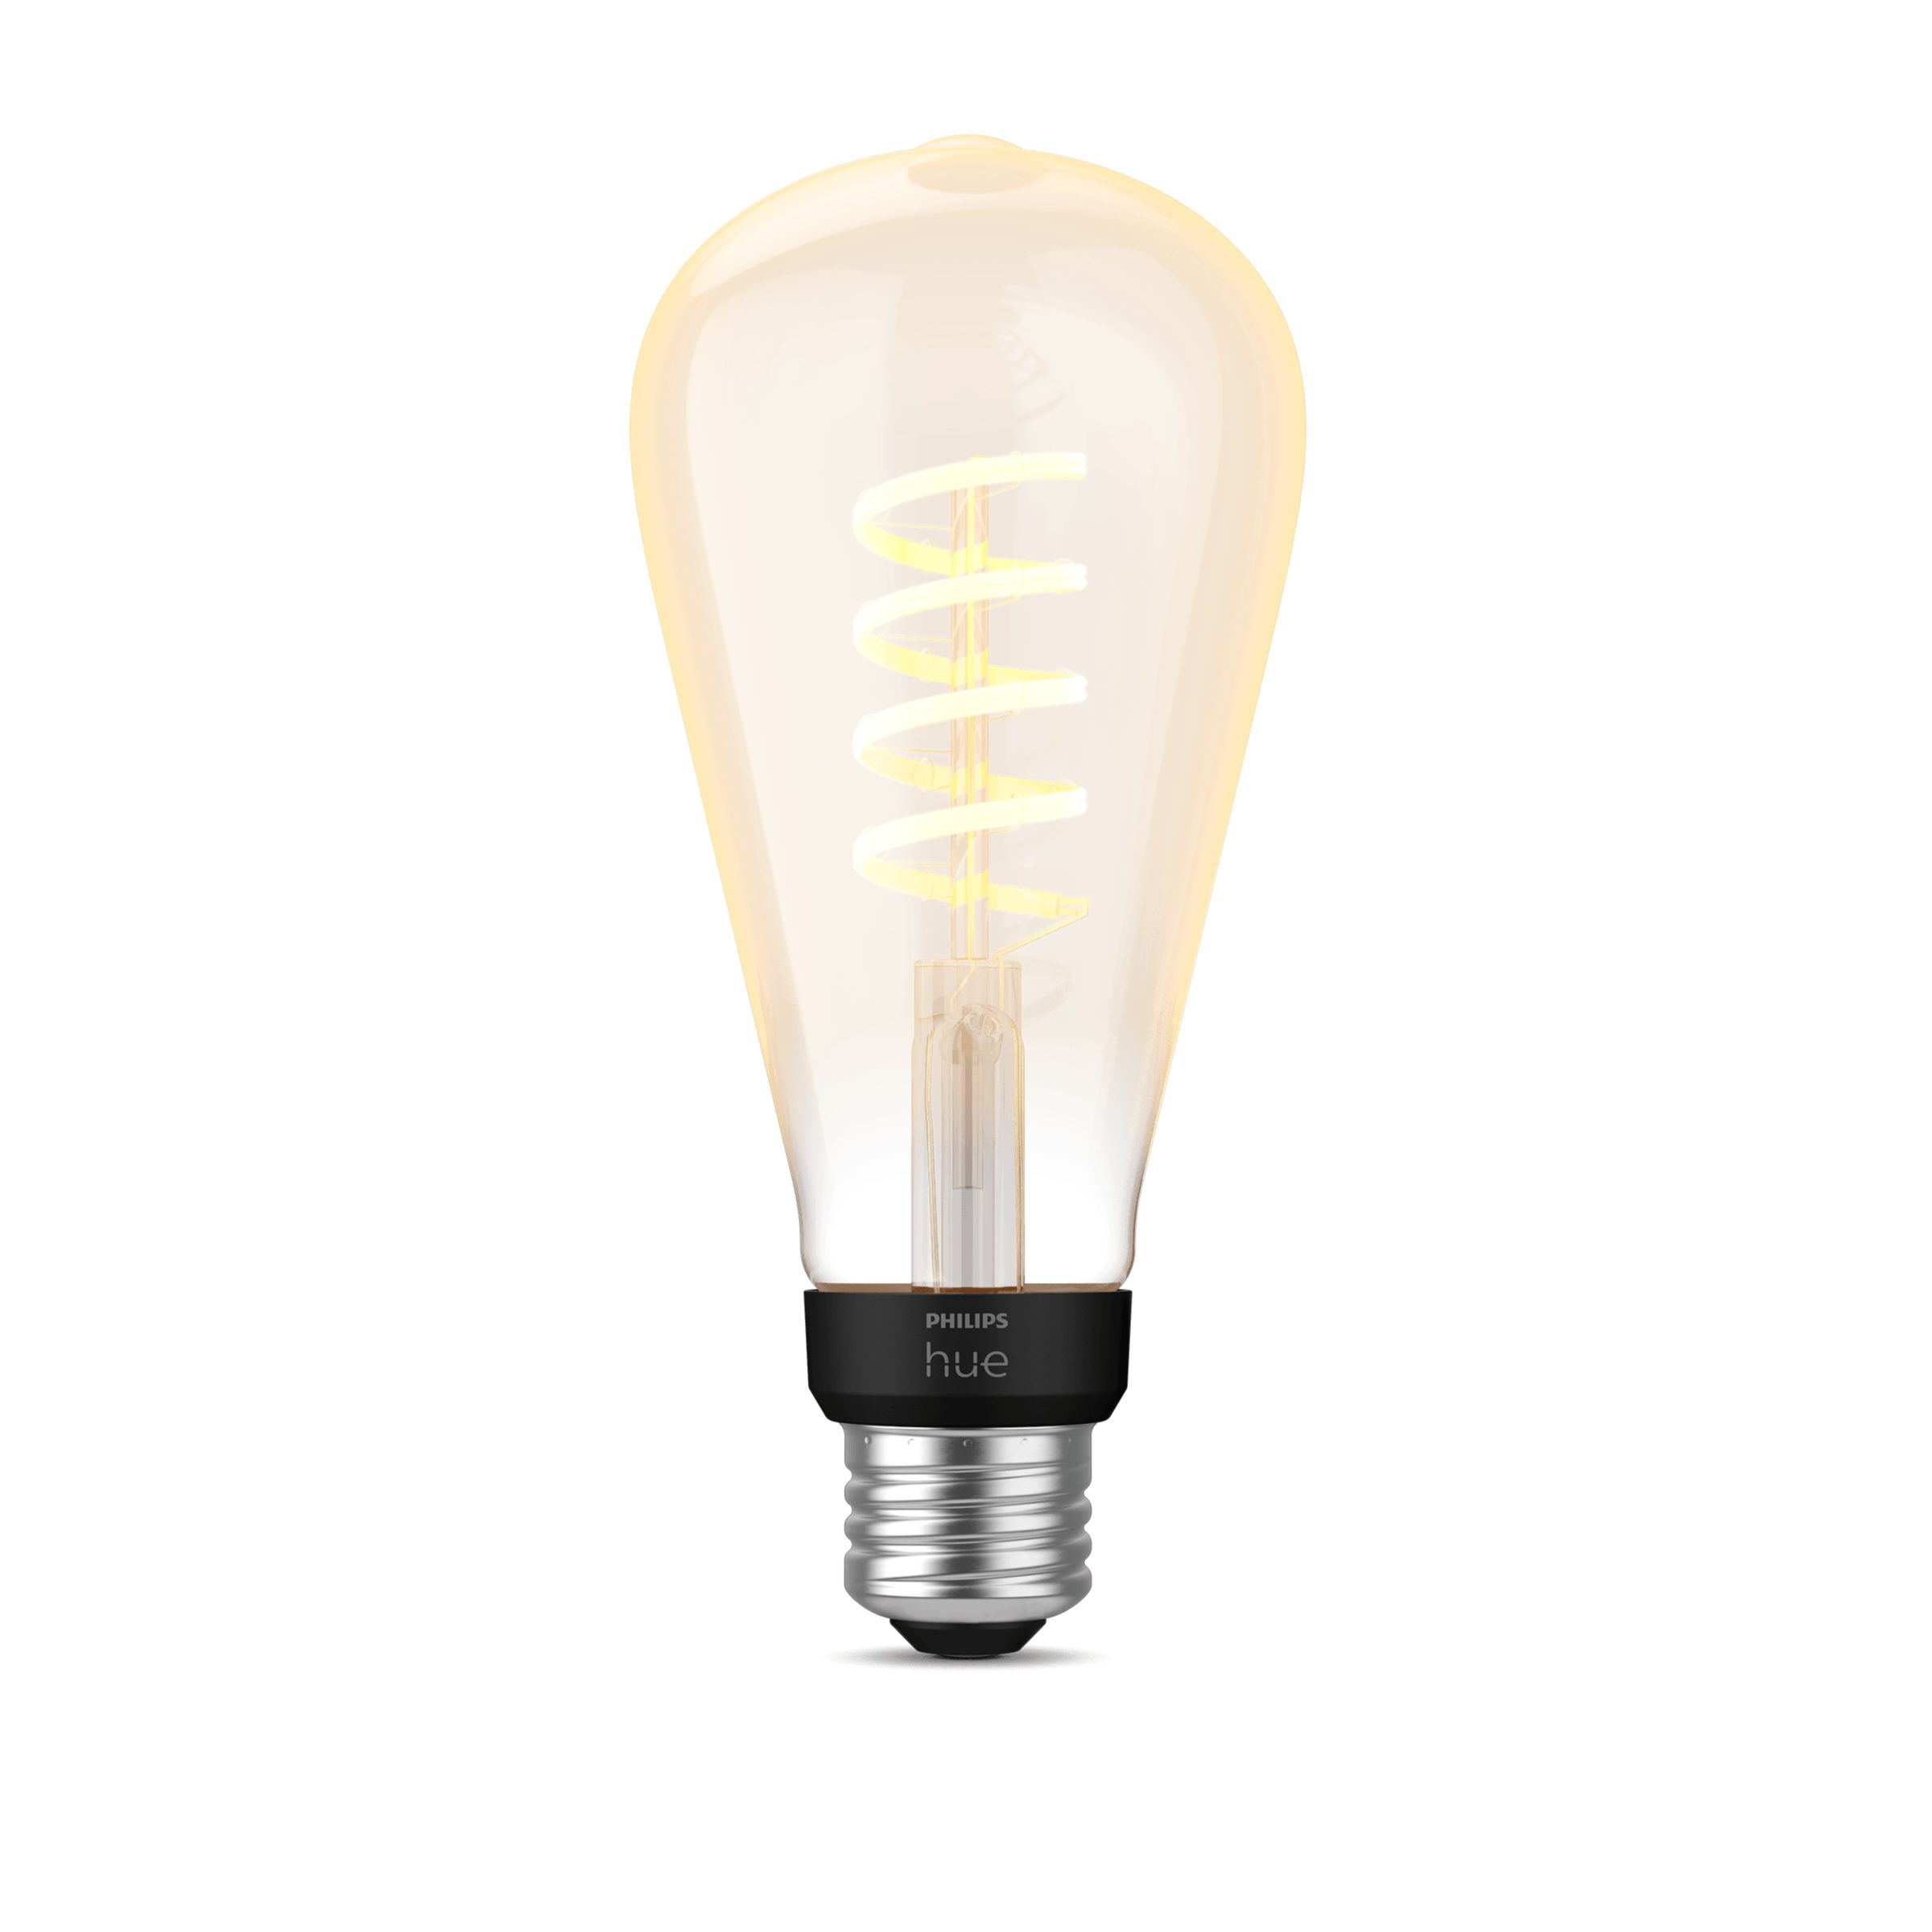 Canada Opførsel dommer Hue White Ambiance Filament ST23 Edison - E26 smart bulb | Philips Hue US